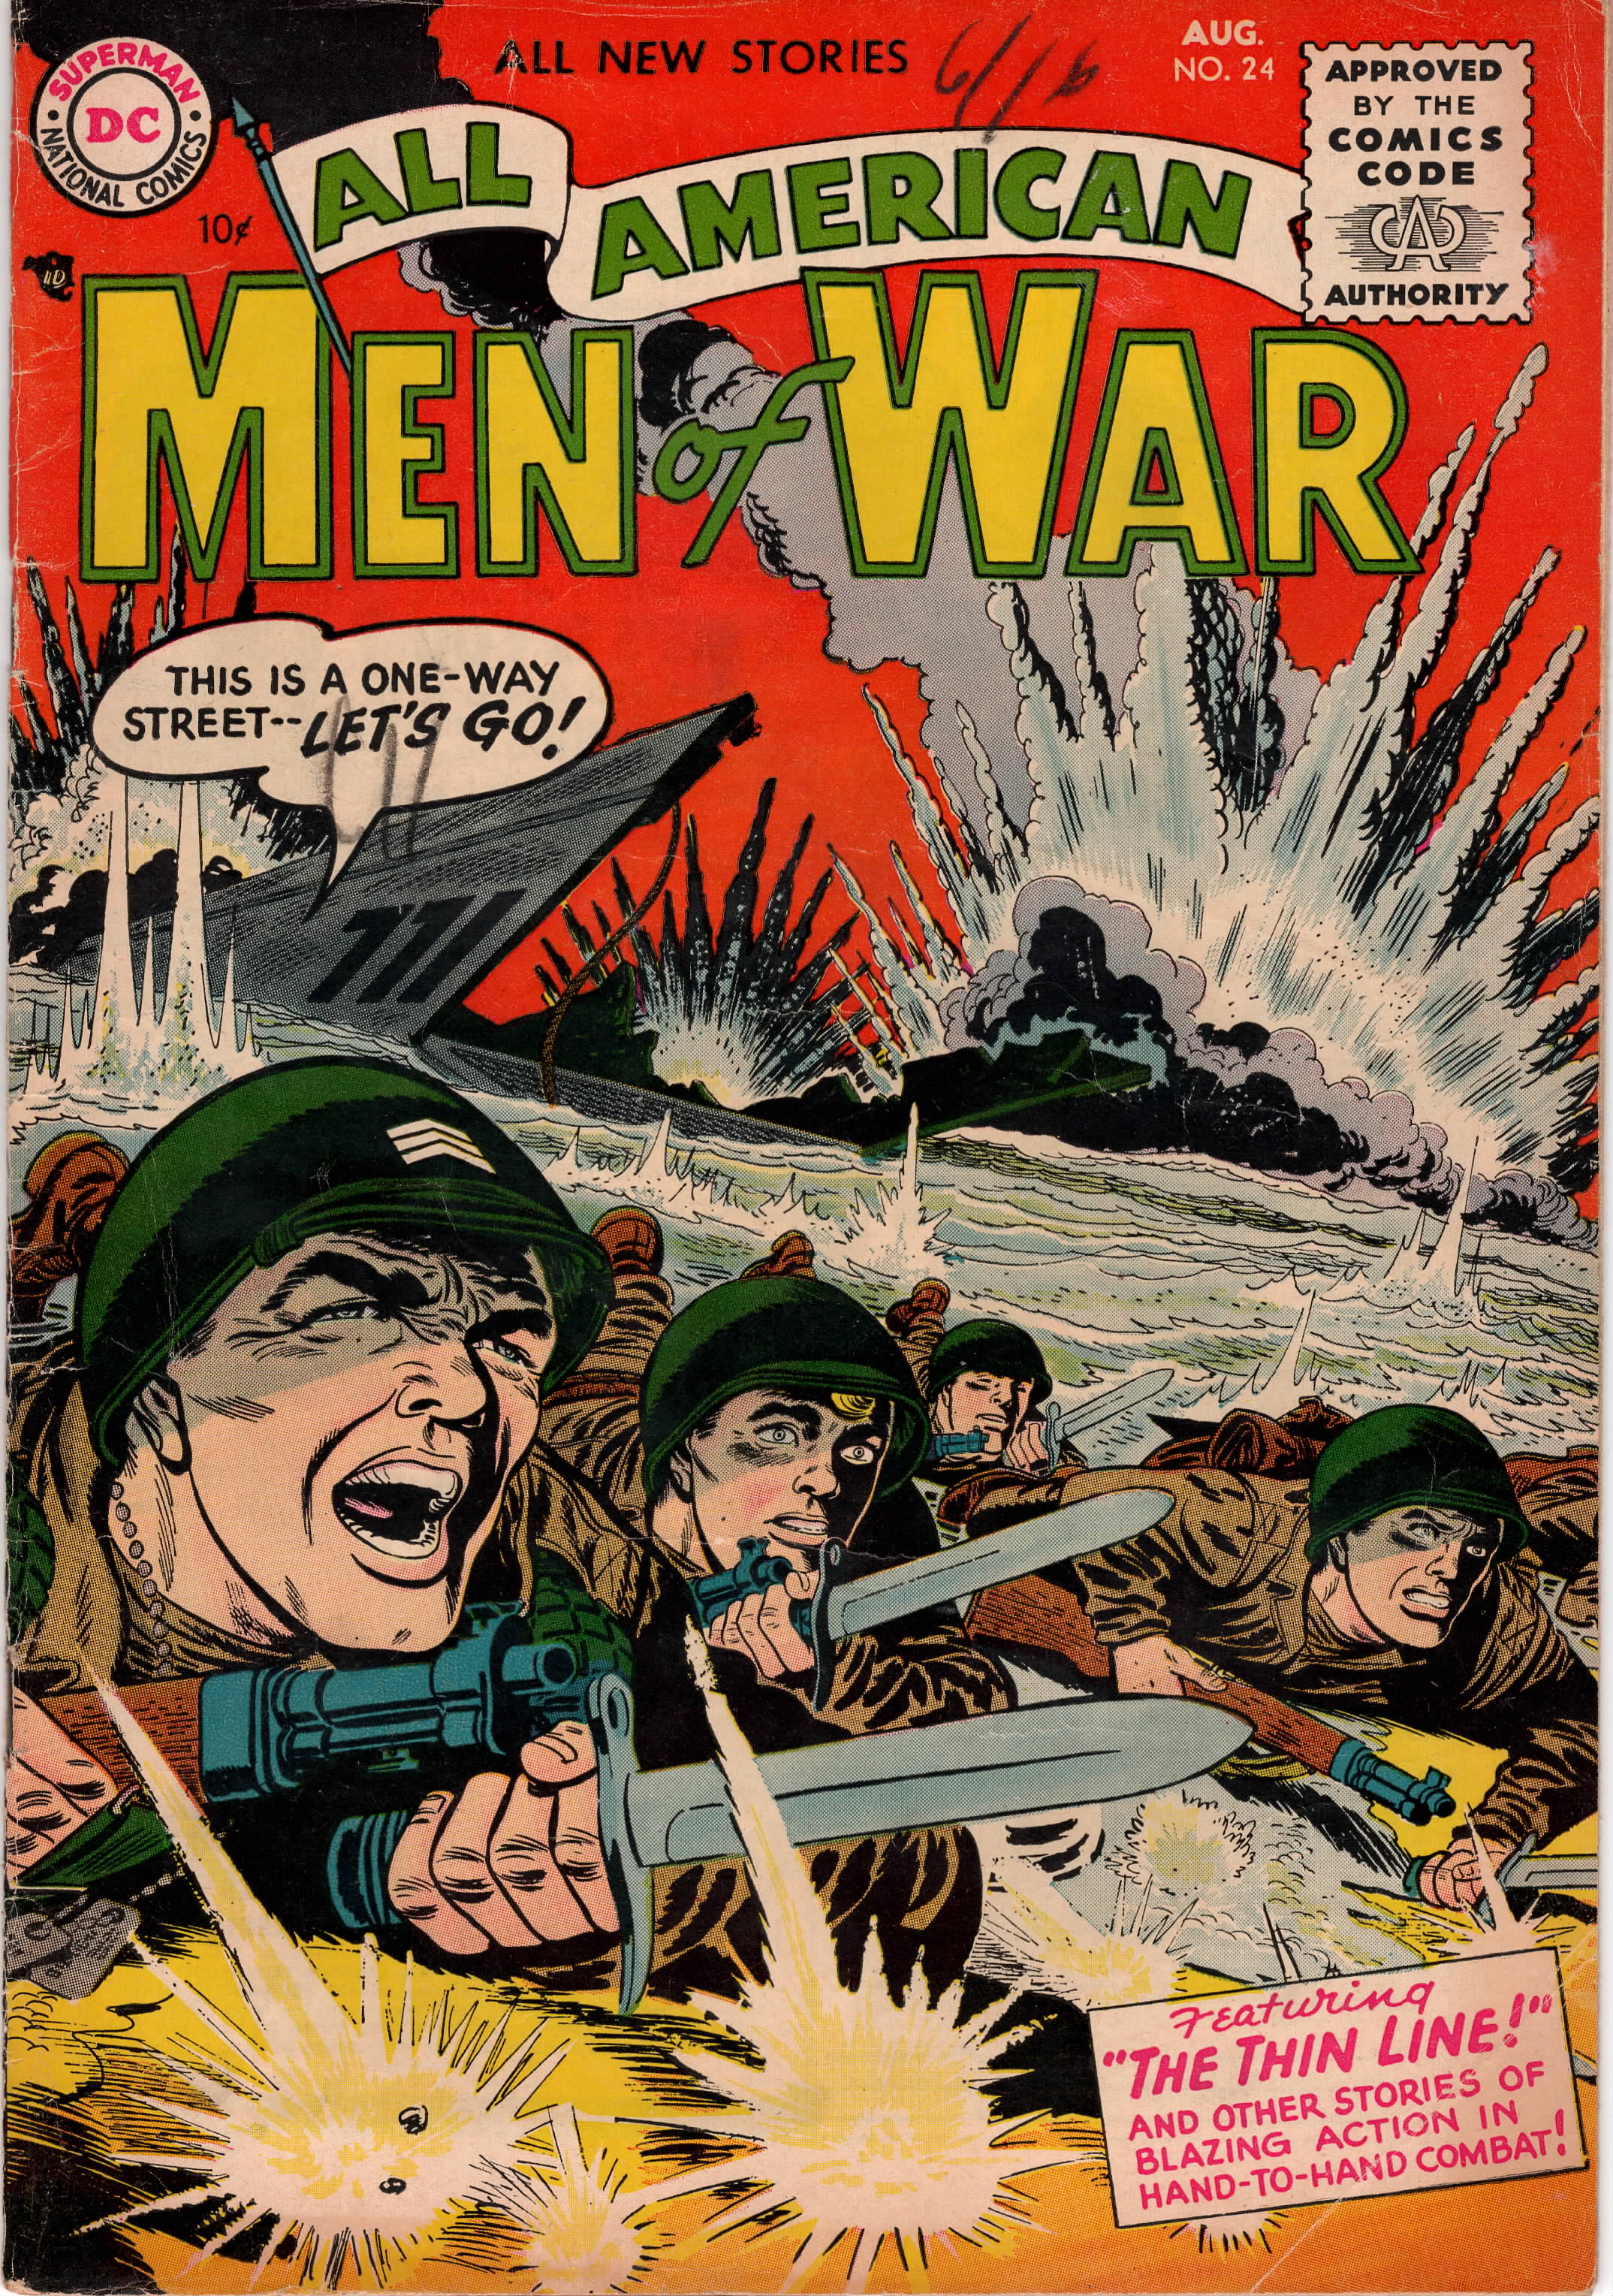 All American Men of War #24